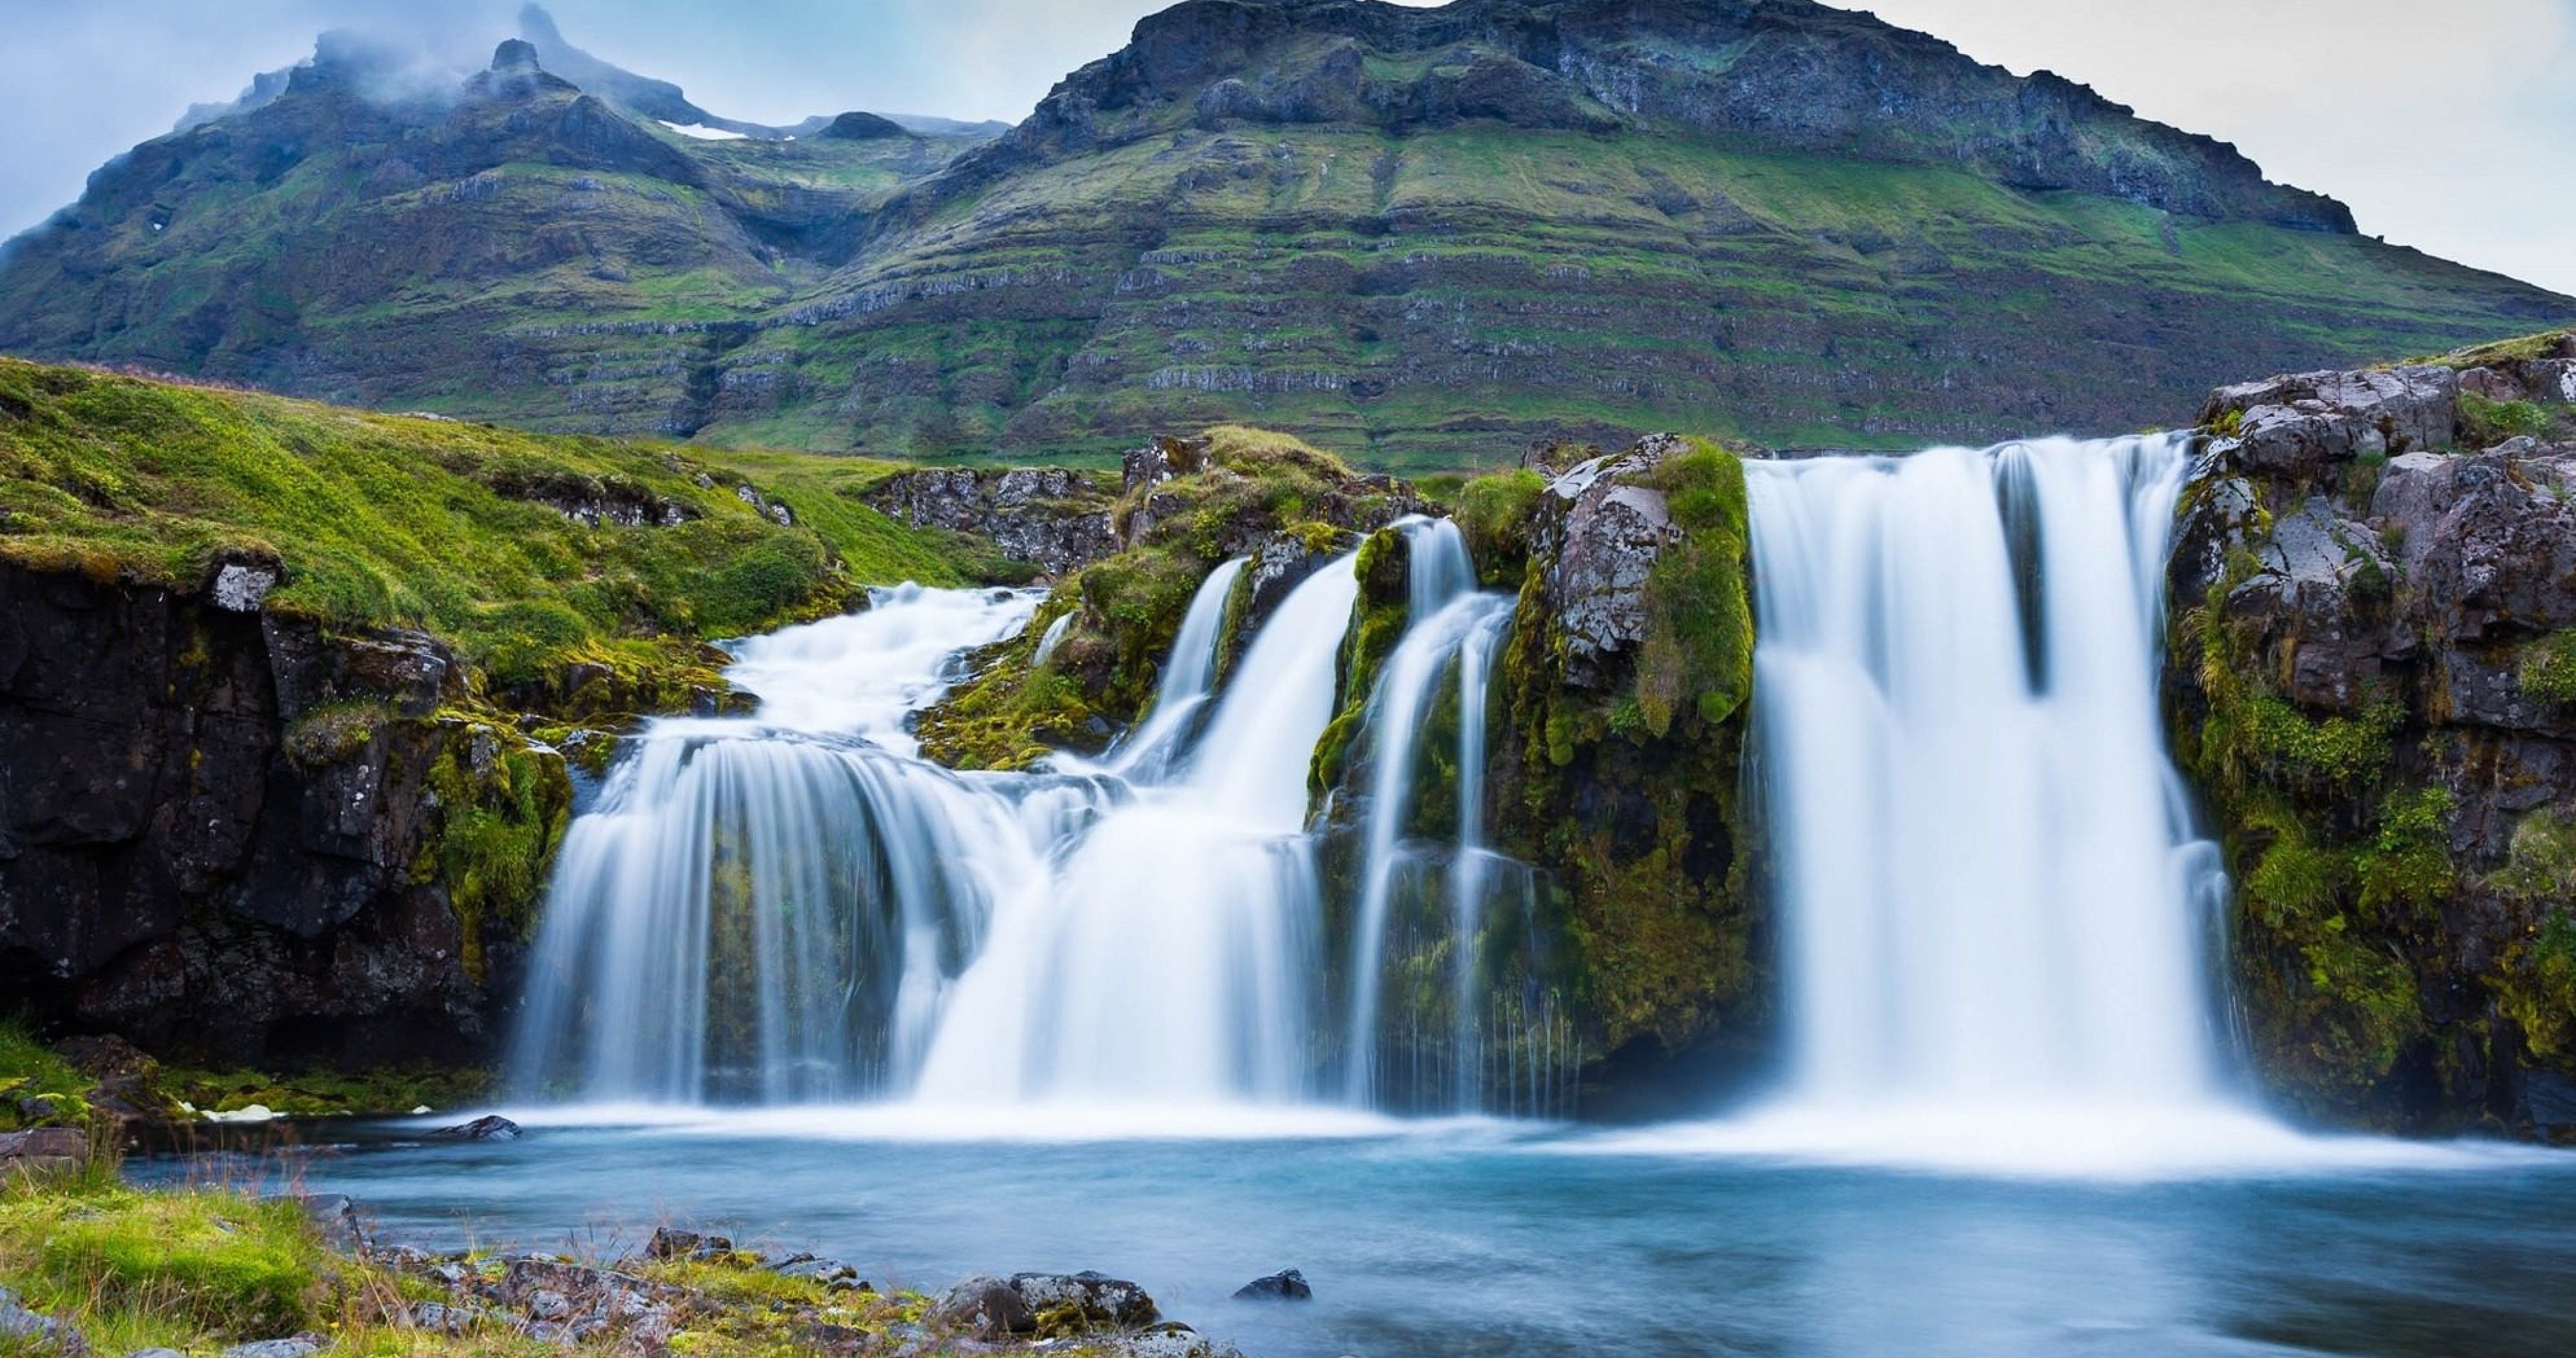 kirkjufoss iceland 4k ultra HD wallpaper. Iceland wallpaper, Iceland waterfalls, Waterfall